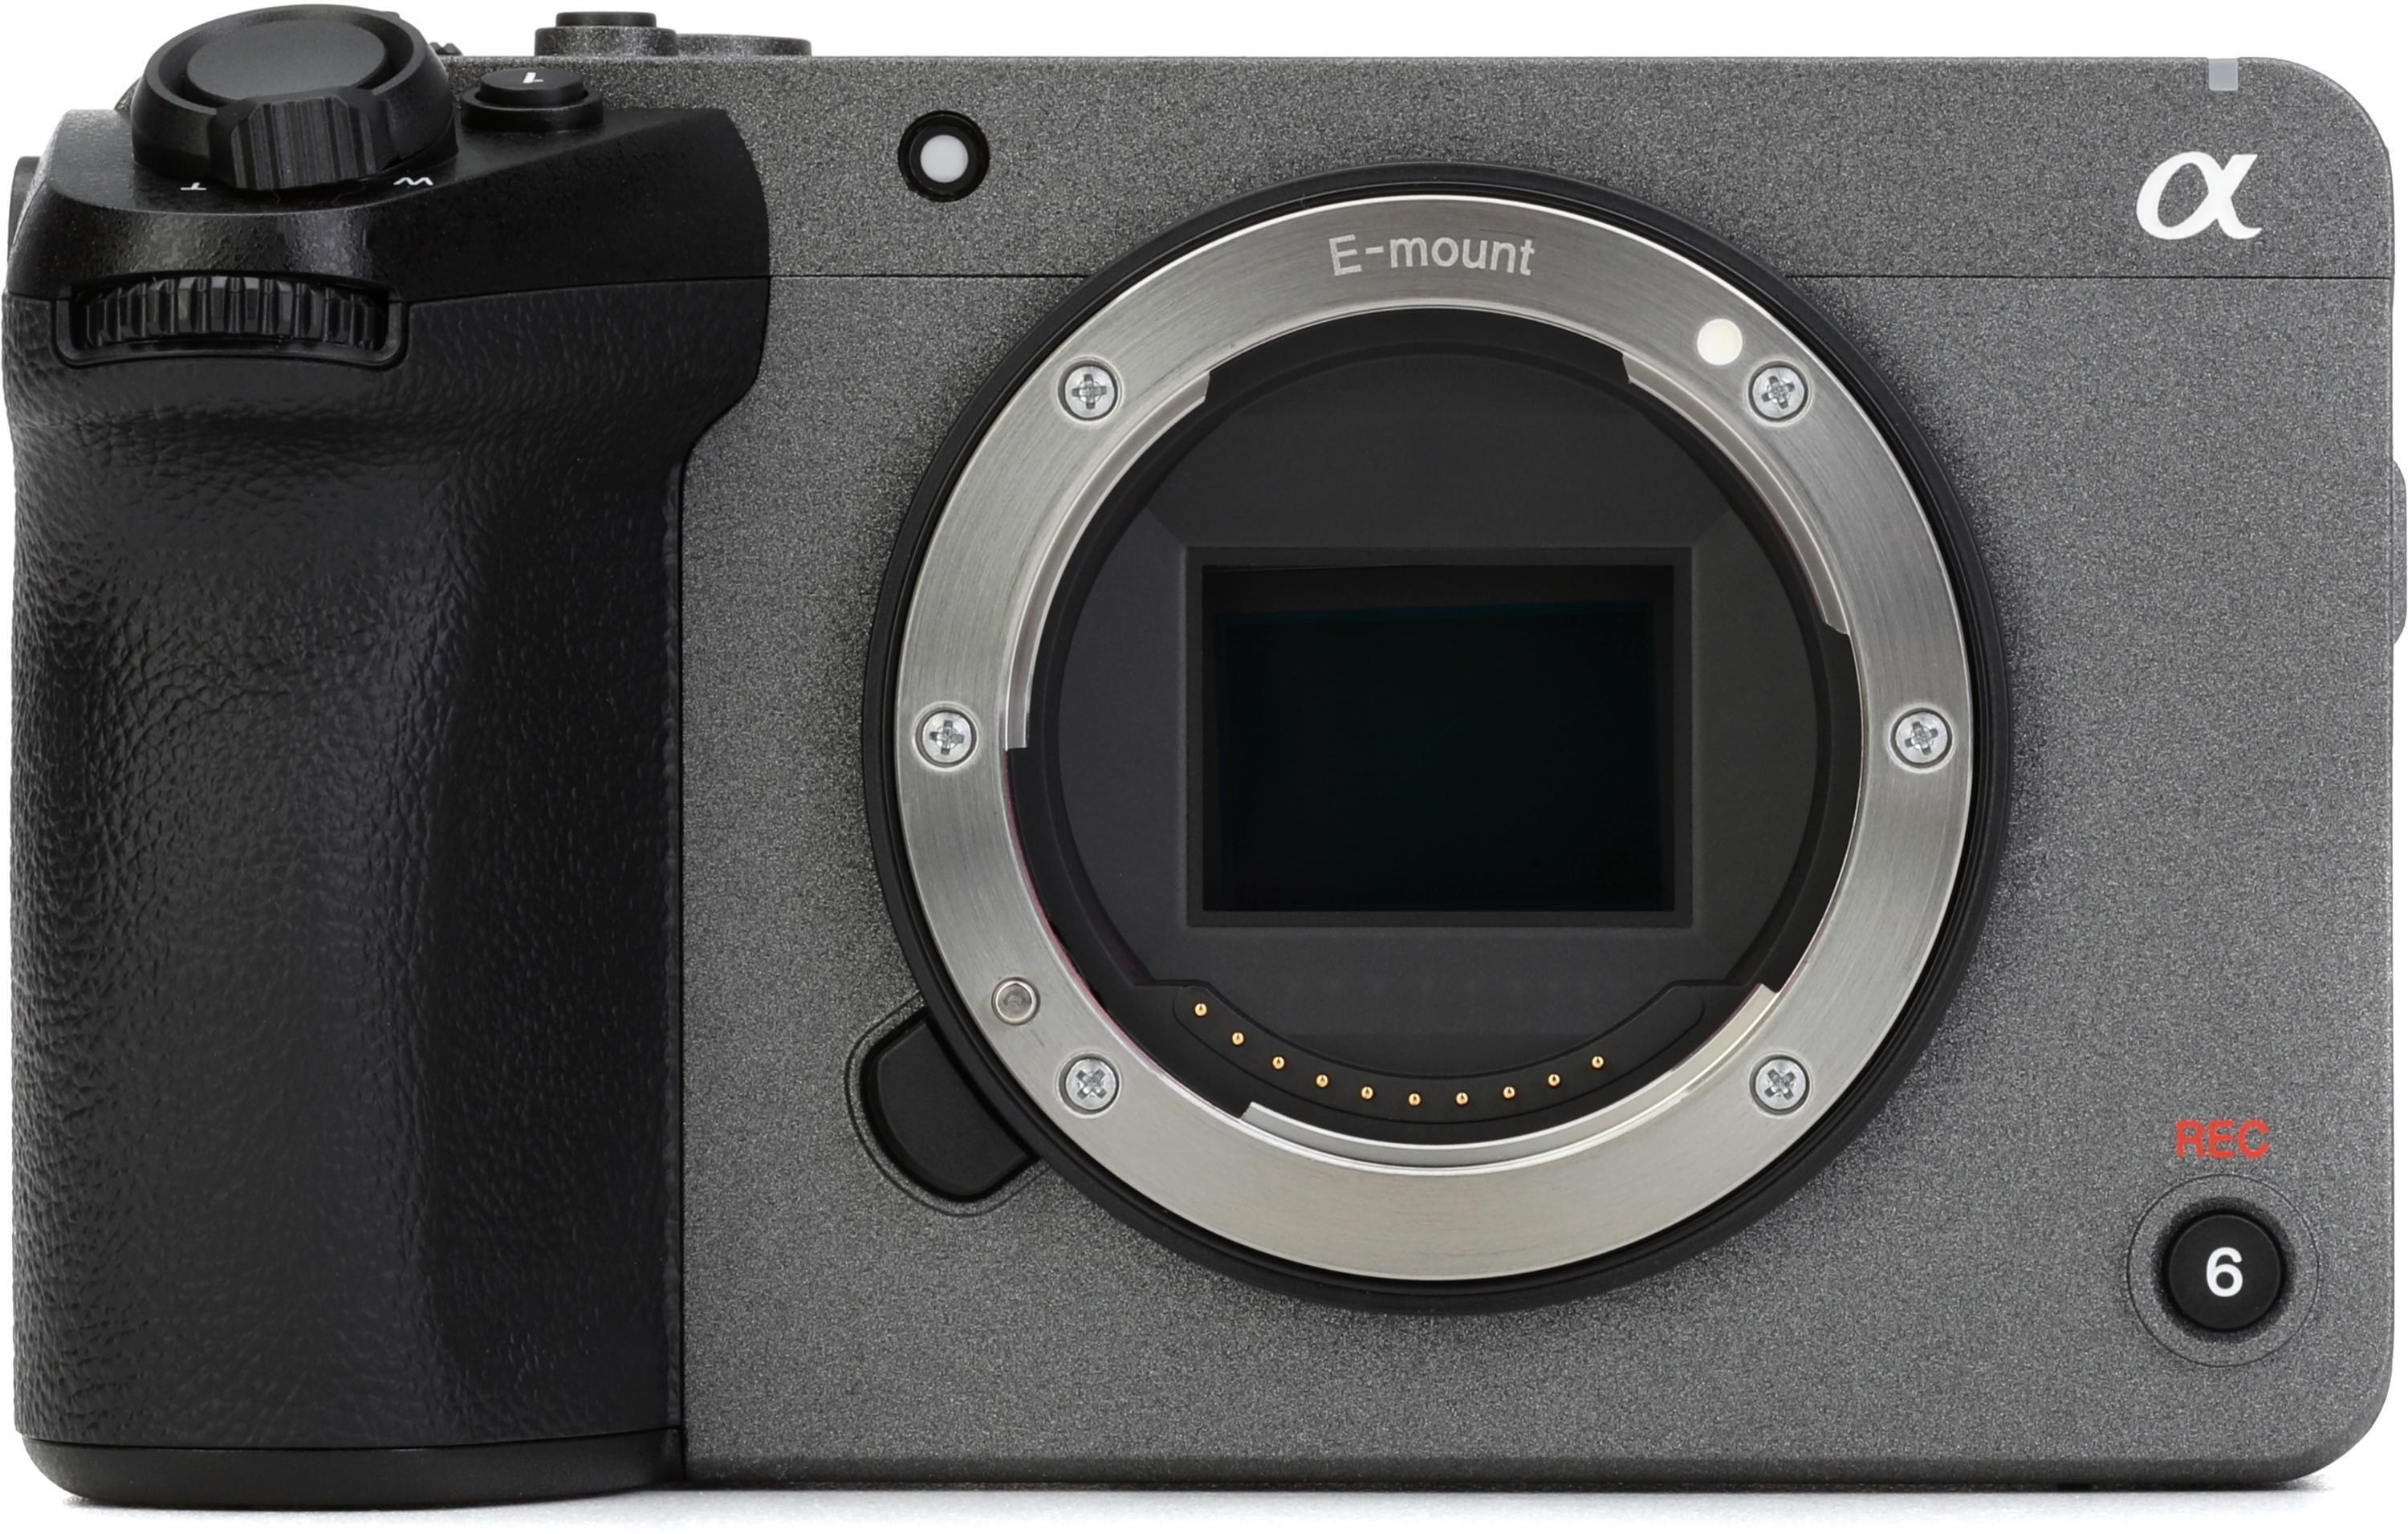 Sony Cinema Line FX30 Super 35 Digital Camera - Body Only